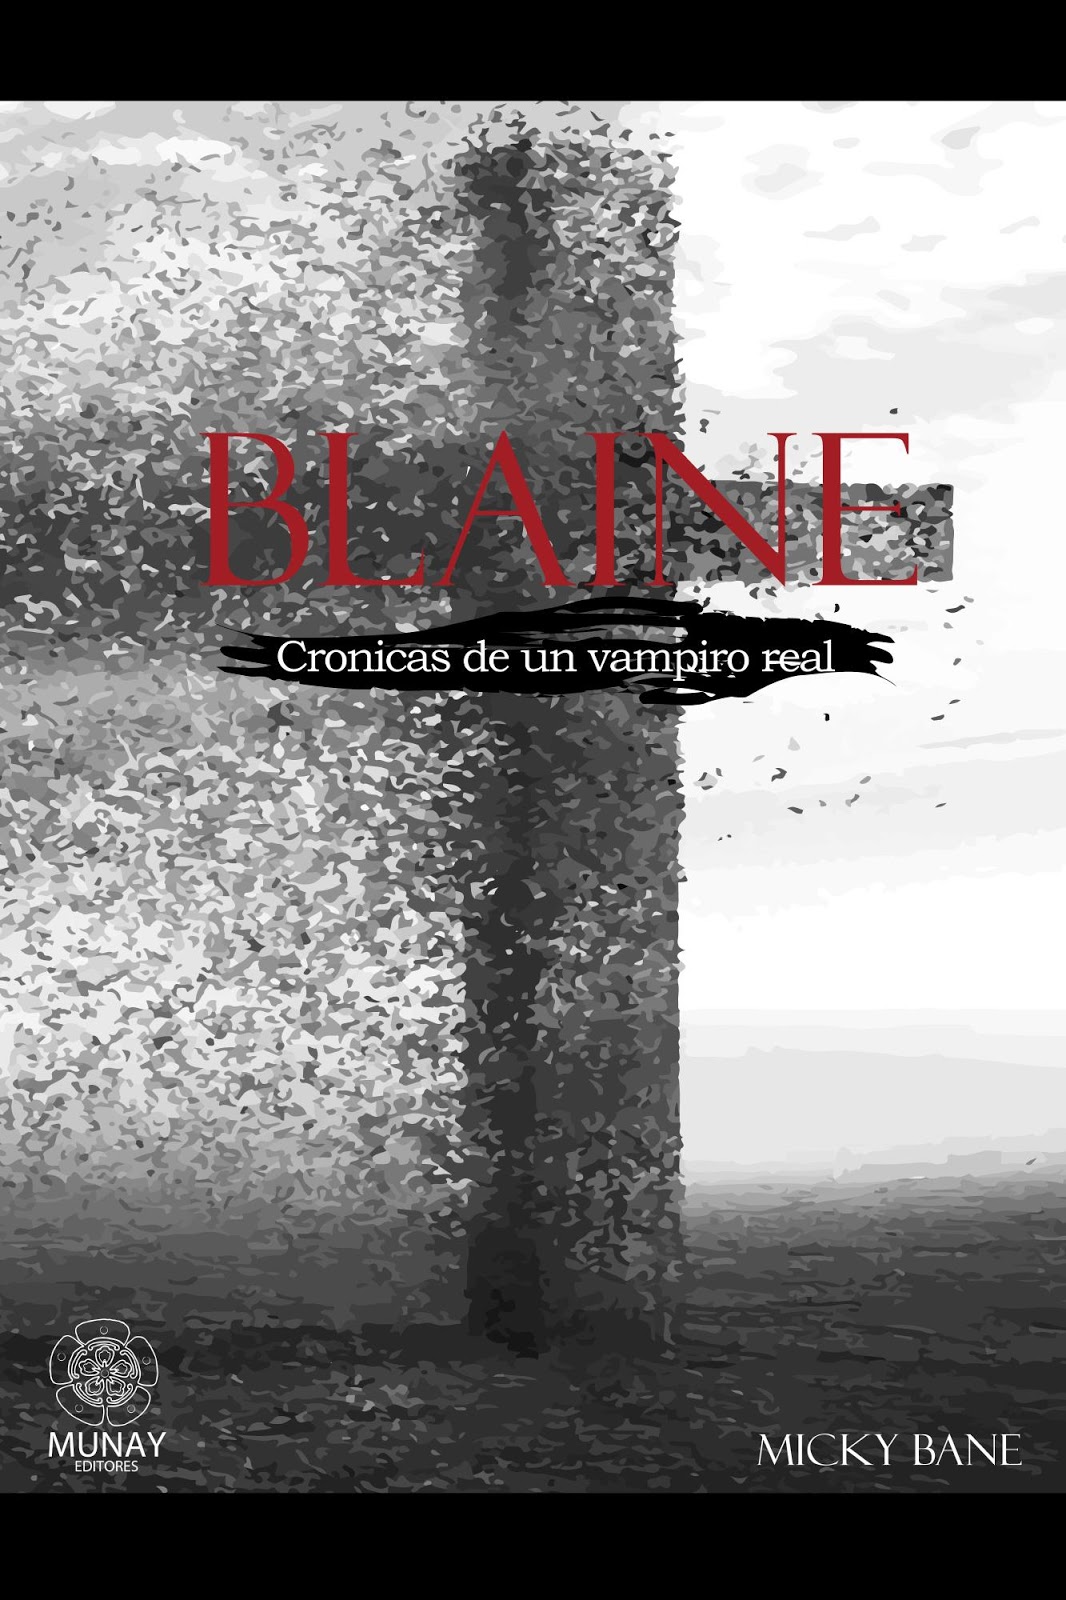 "Blaine" de Micky Bane